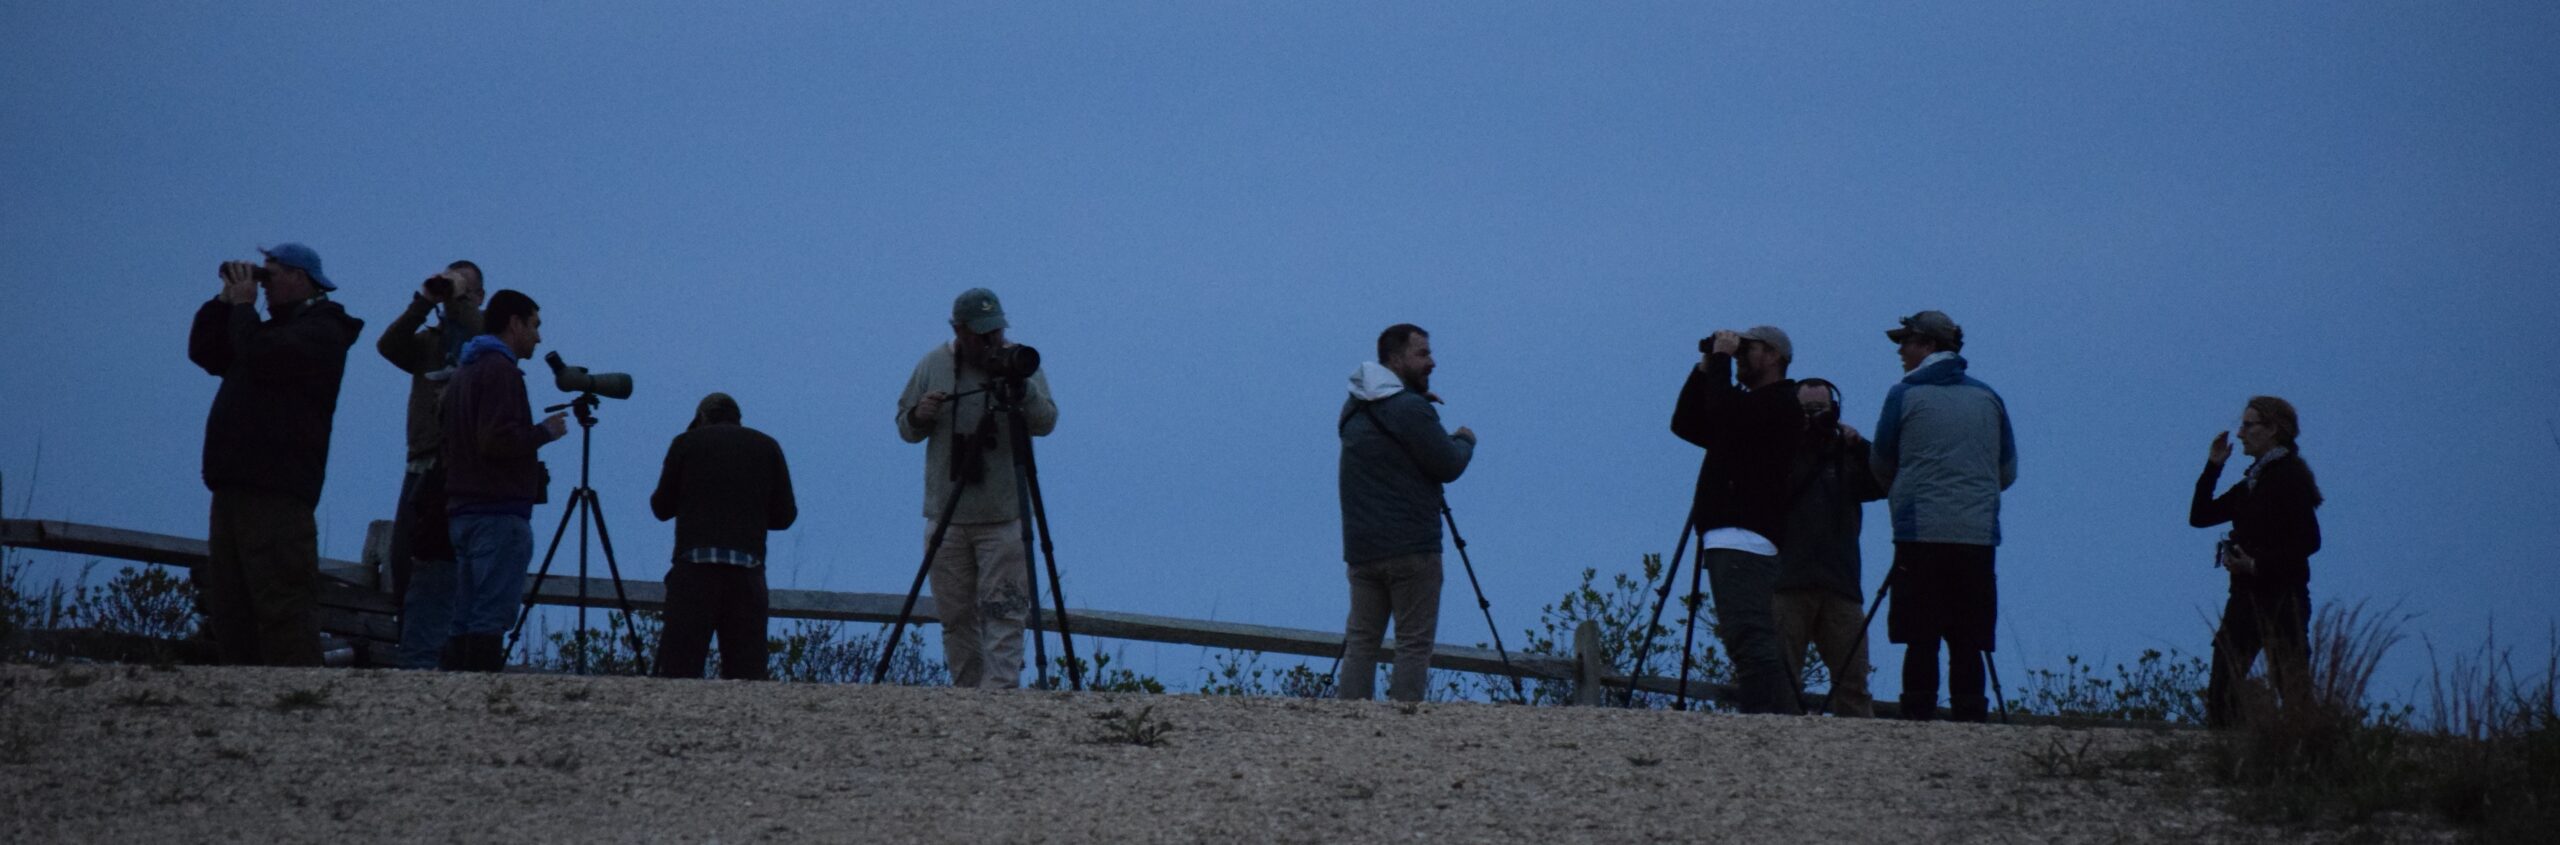 group of photographers at dusk bird watching